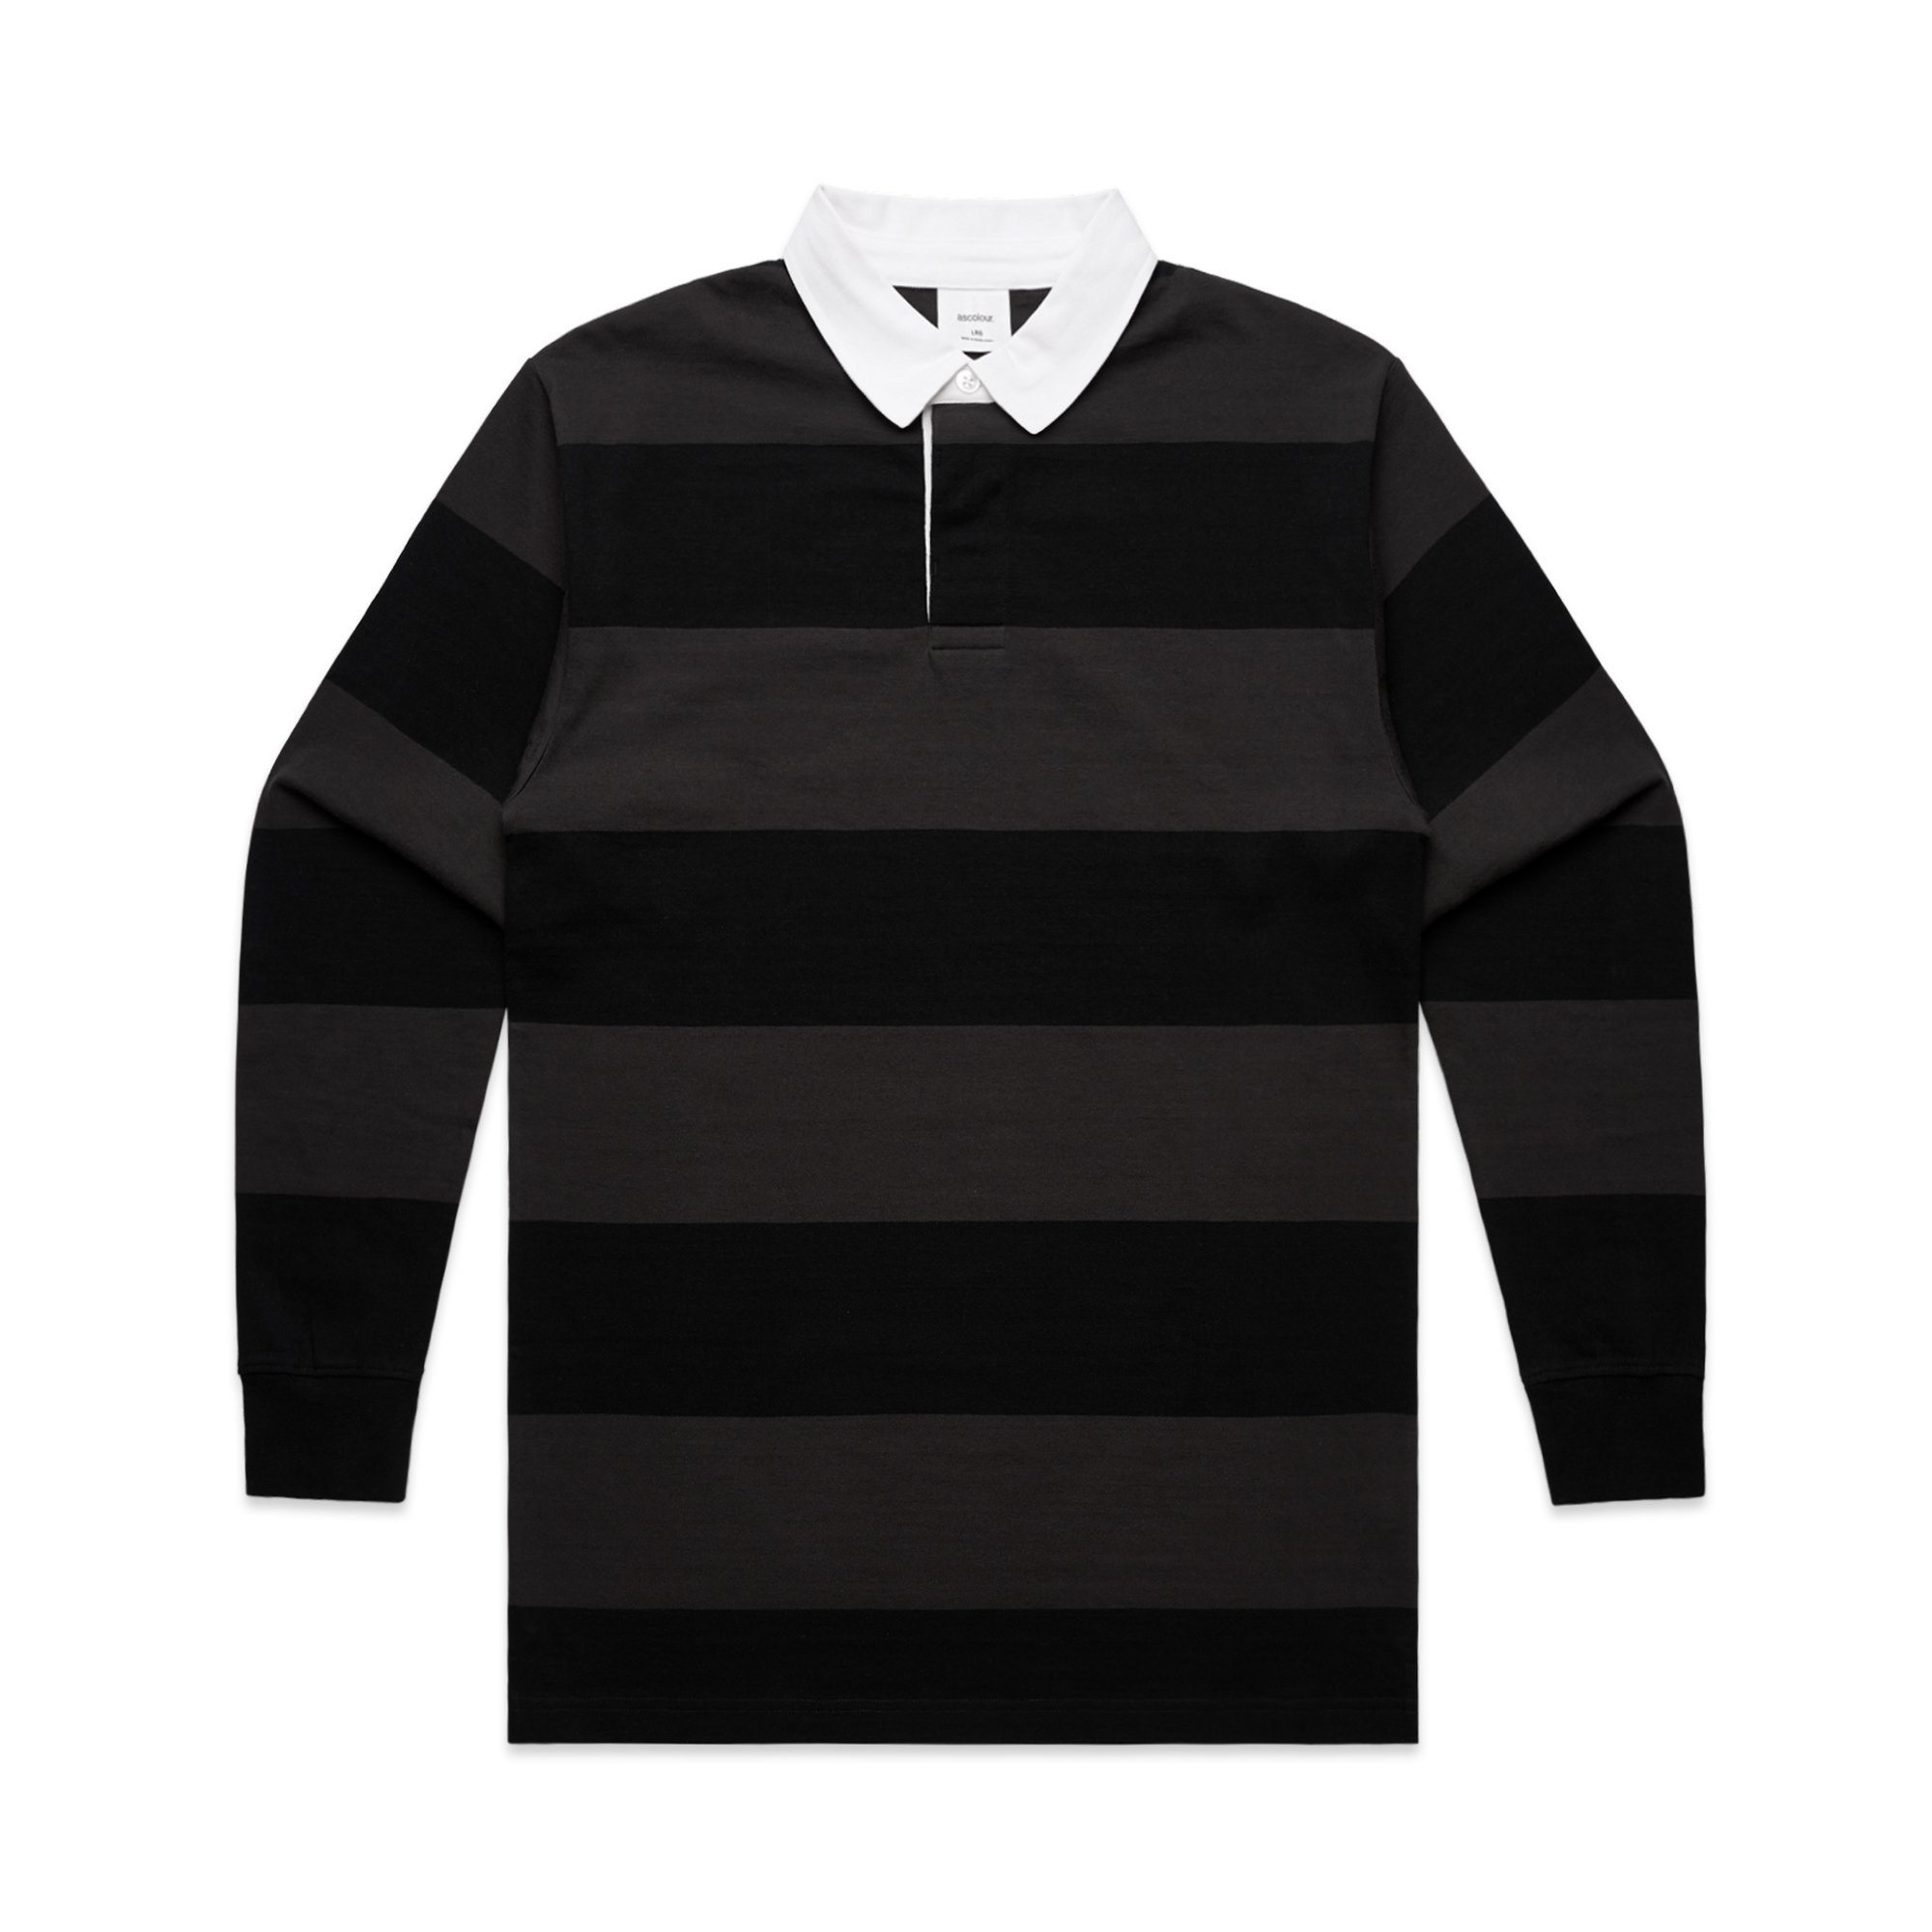 AS Colour Stripe Rugby Shirt - 5416